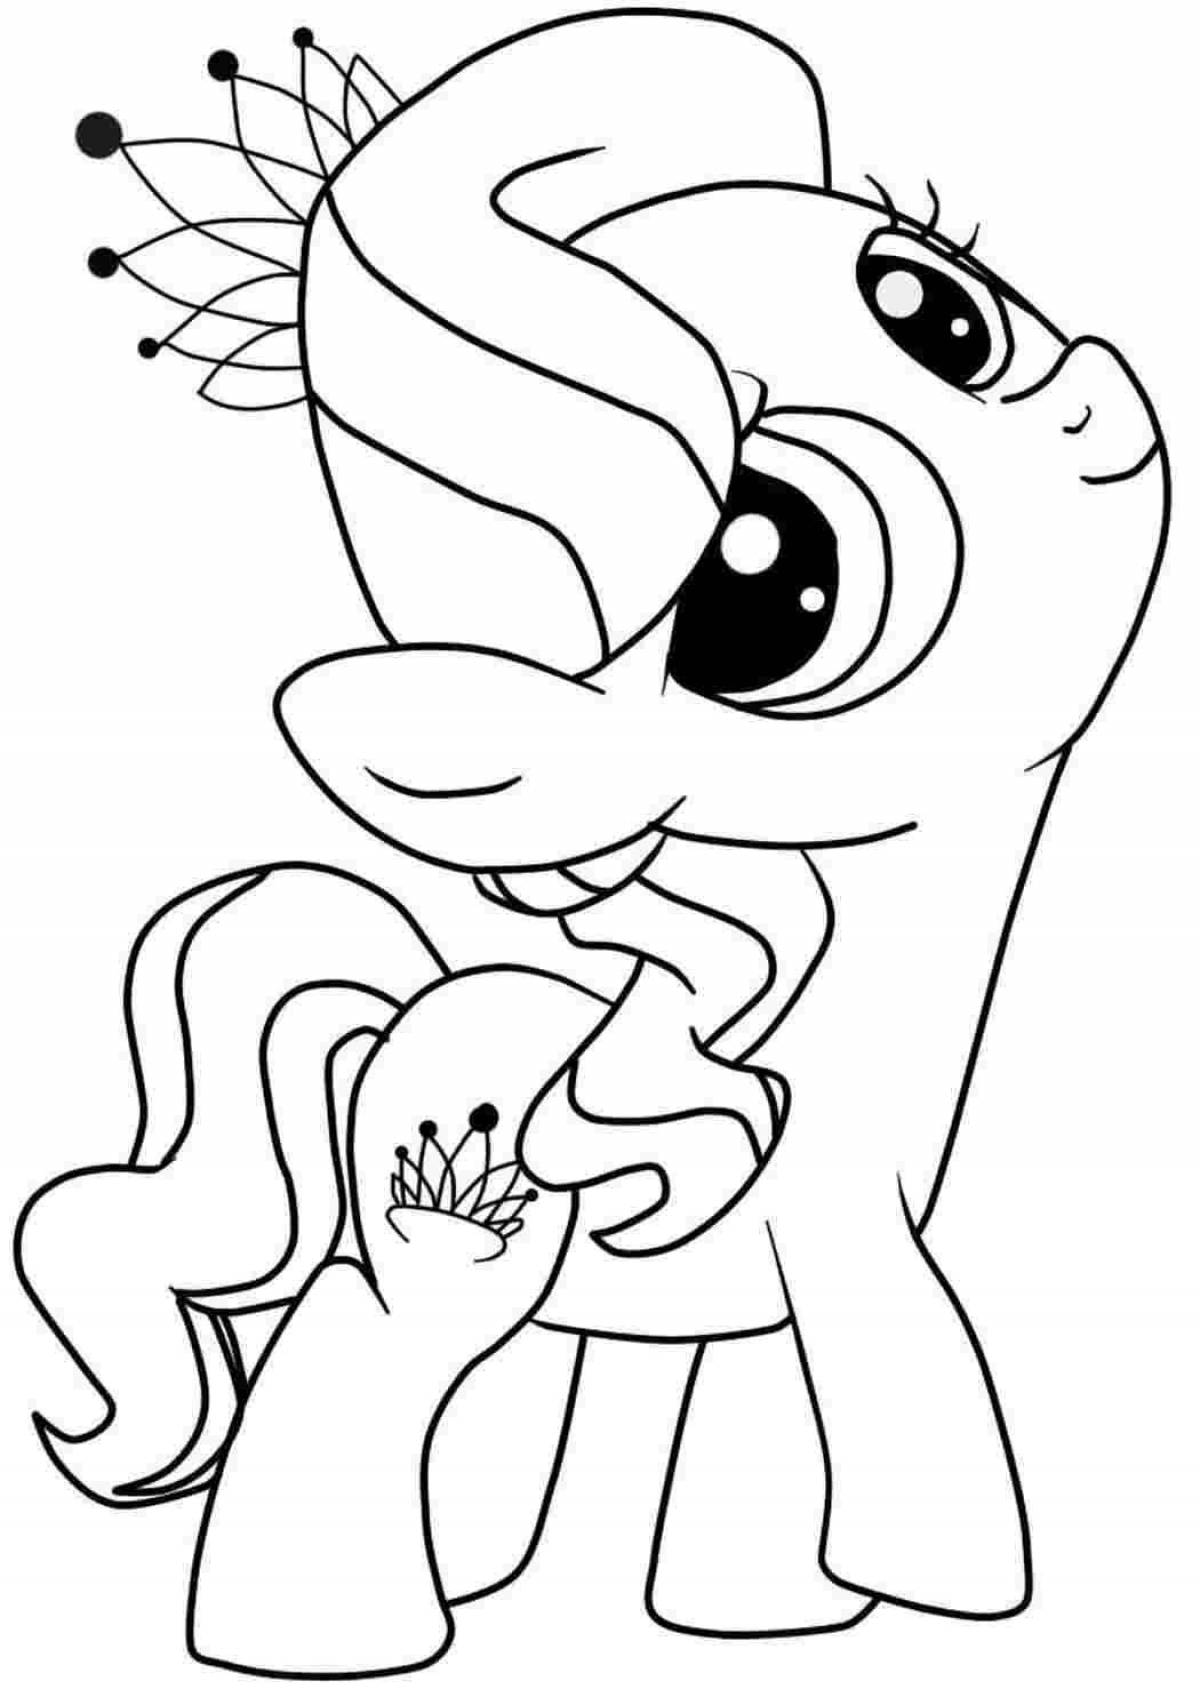 Cute cartoon pony coloring page